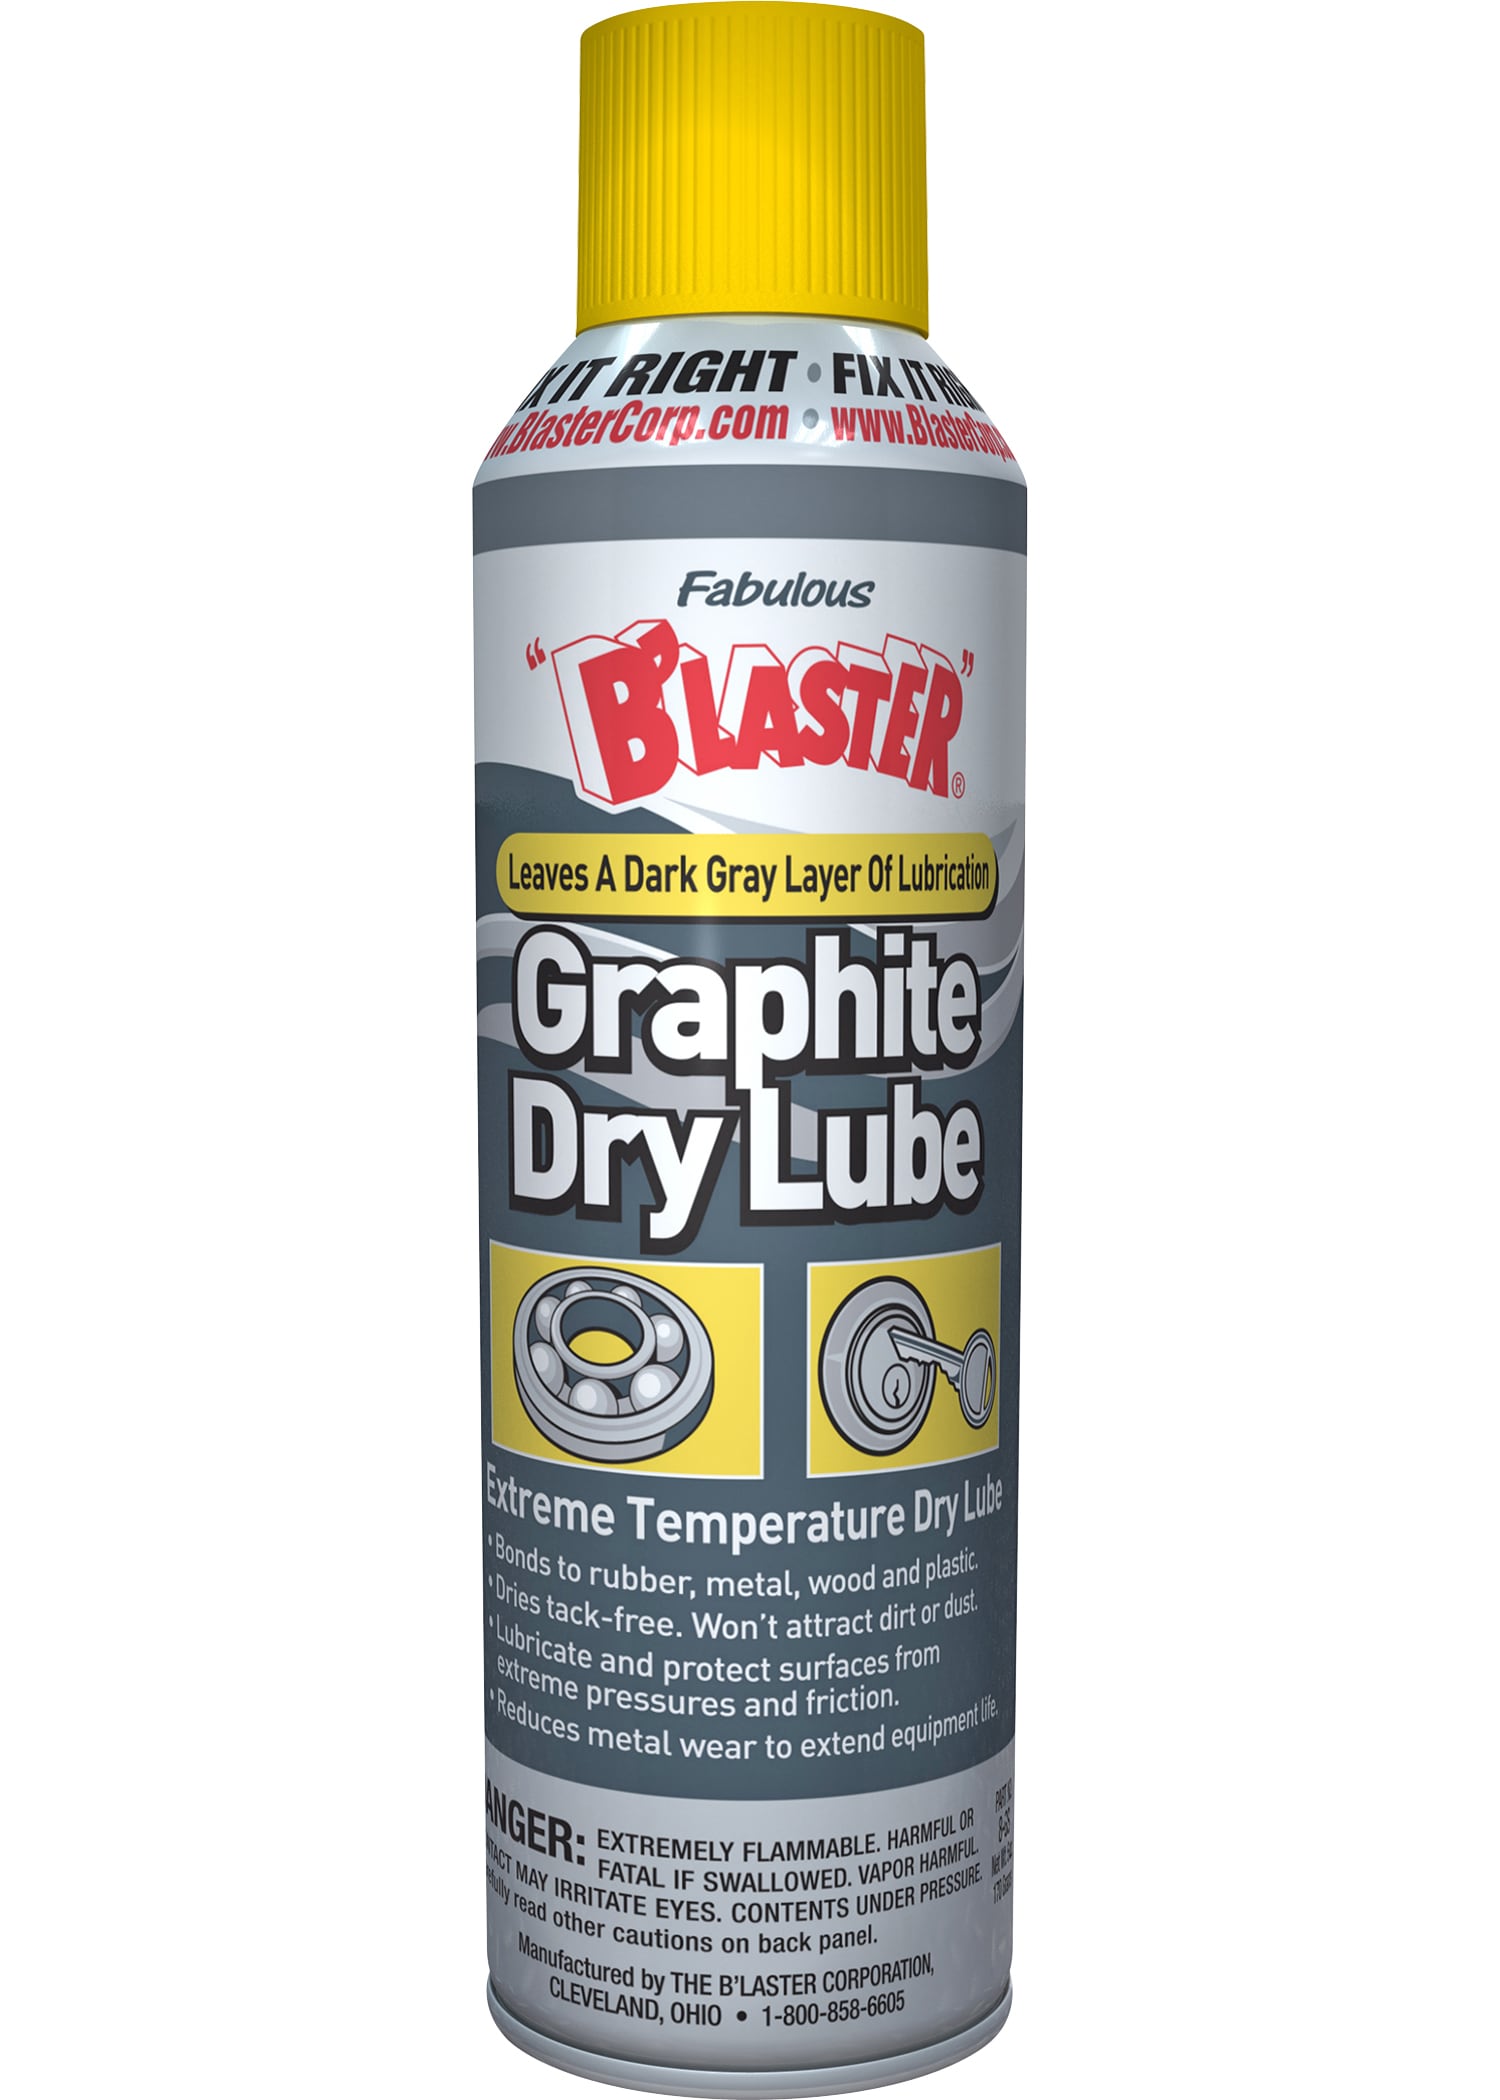 Blaster 5.5-oz Graphite Dry Lube at